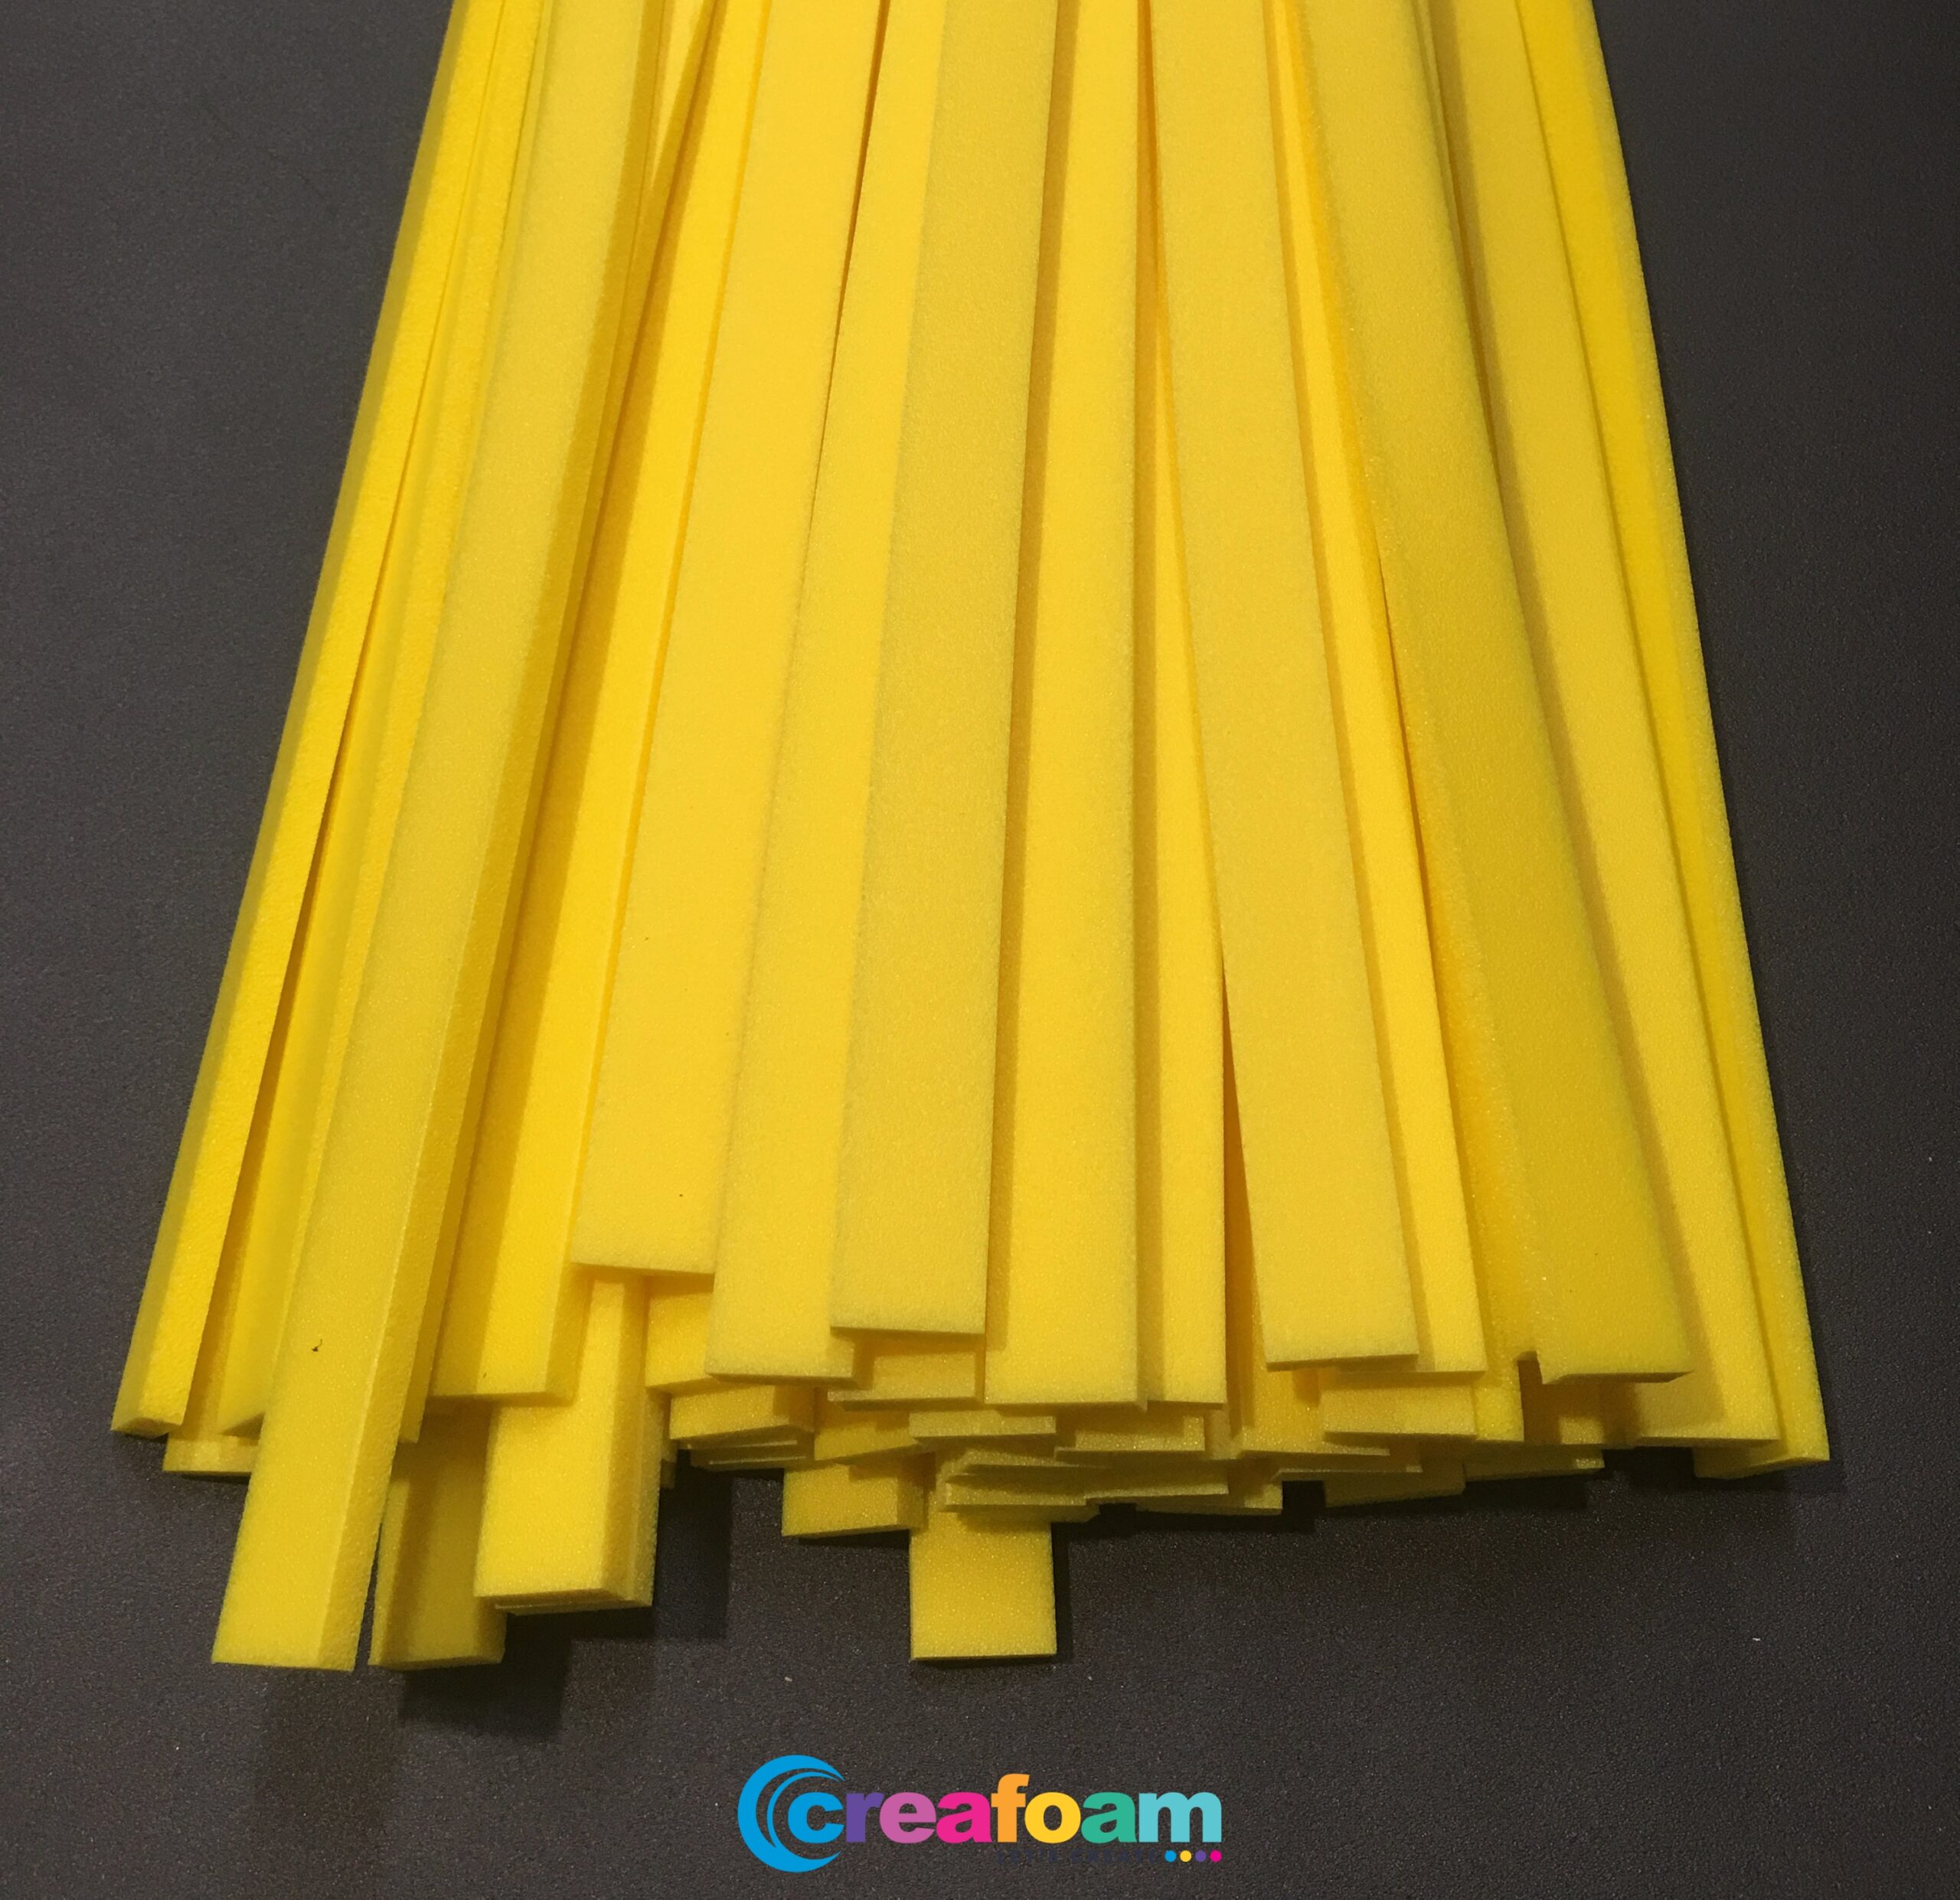 Foam Strips Canary Yellow - Creafoam